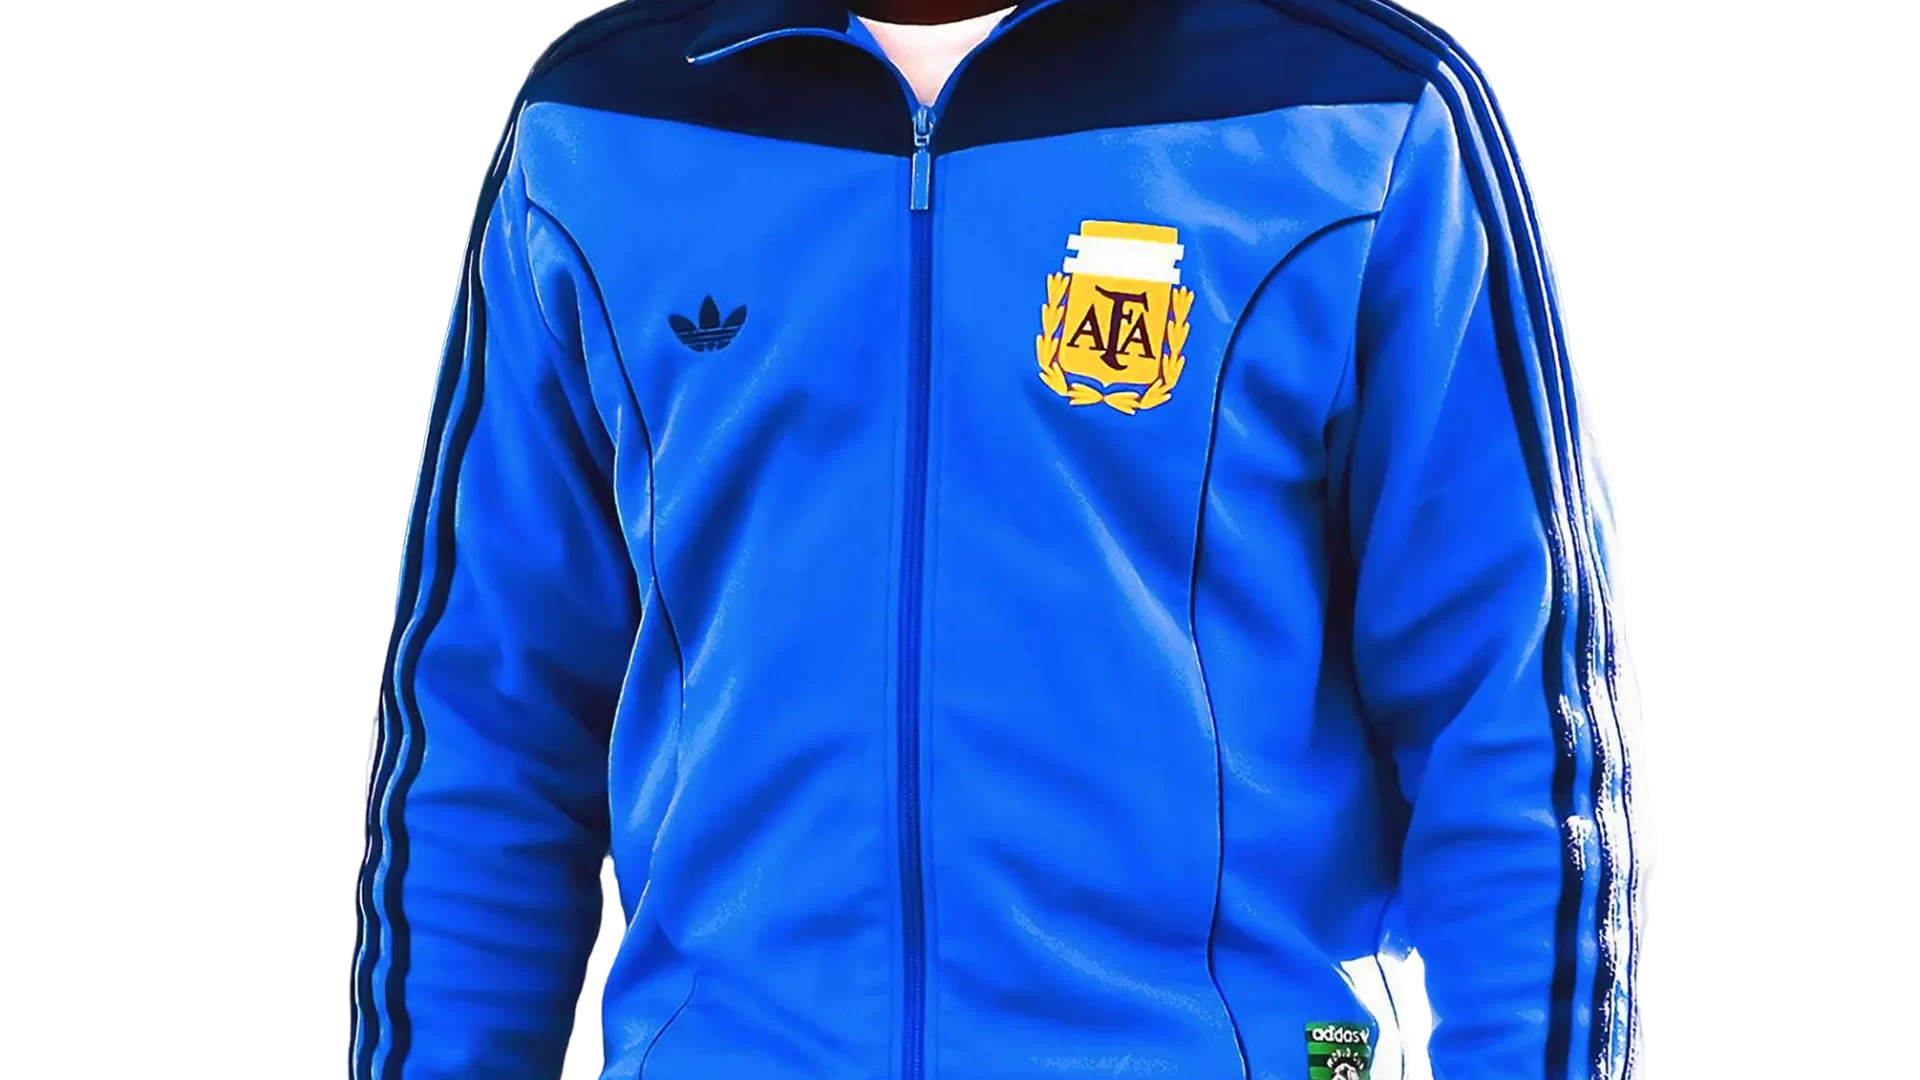 Men's 2005 Argentina WC '78 TT by Adidas Originals: Impressive (EnLawded.com file #lmchk40261ip2y121433kg9st)